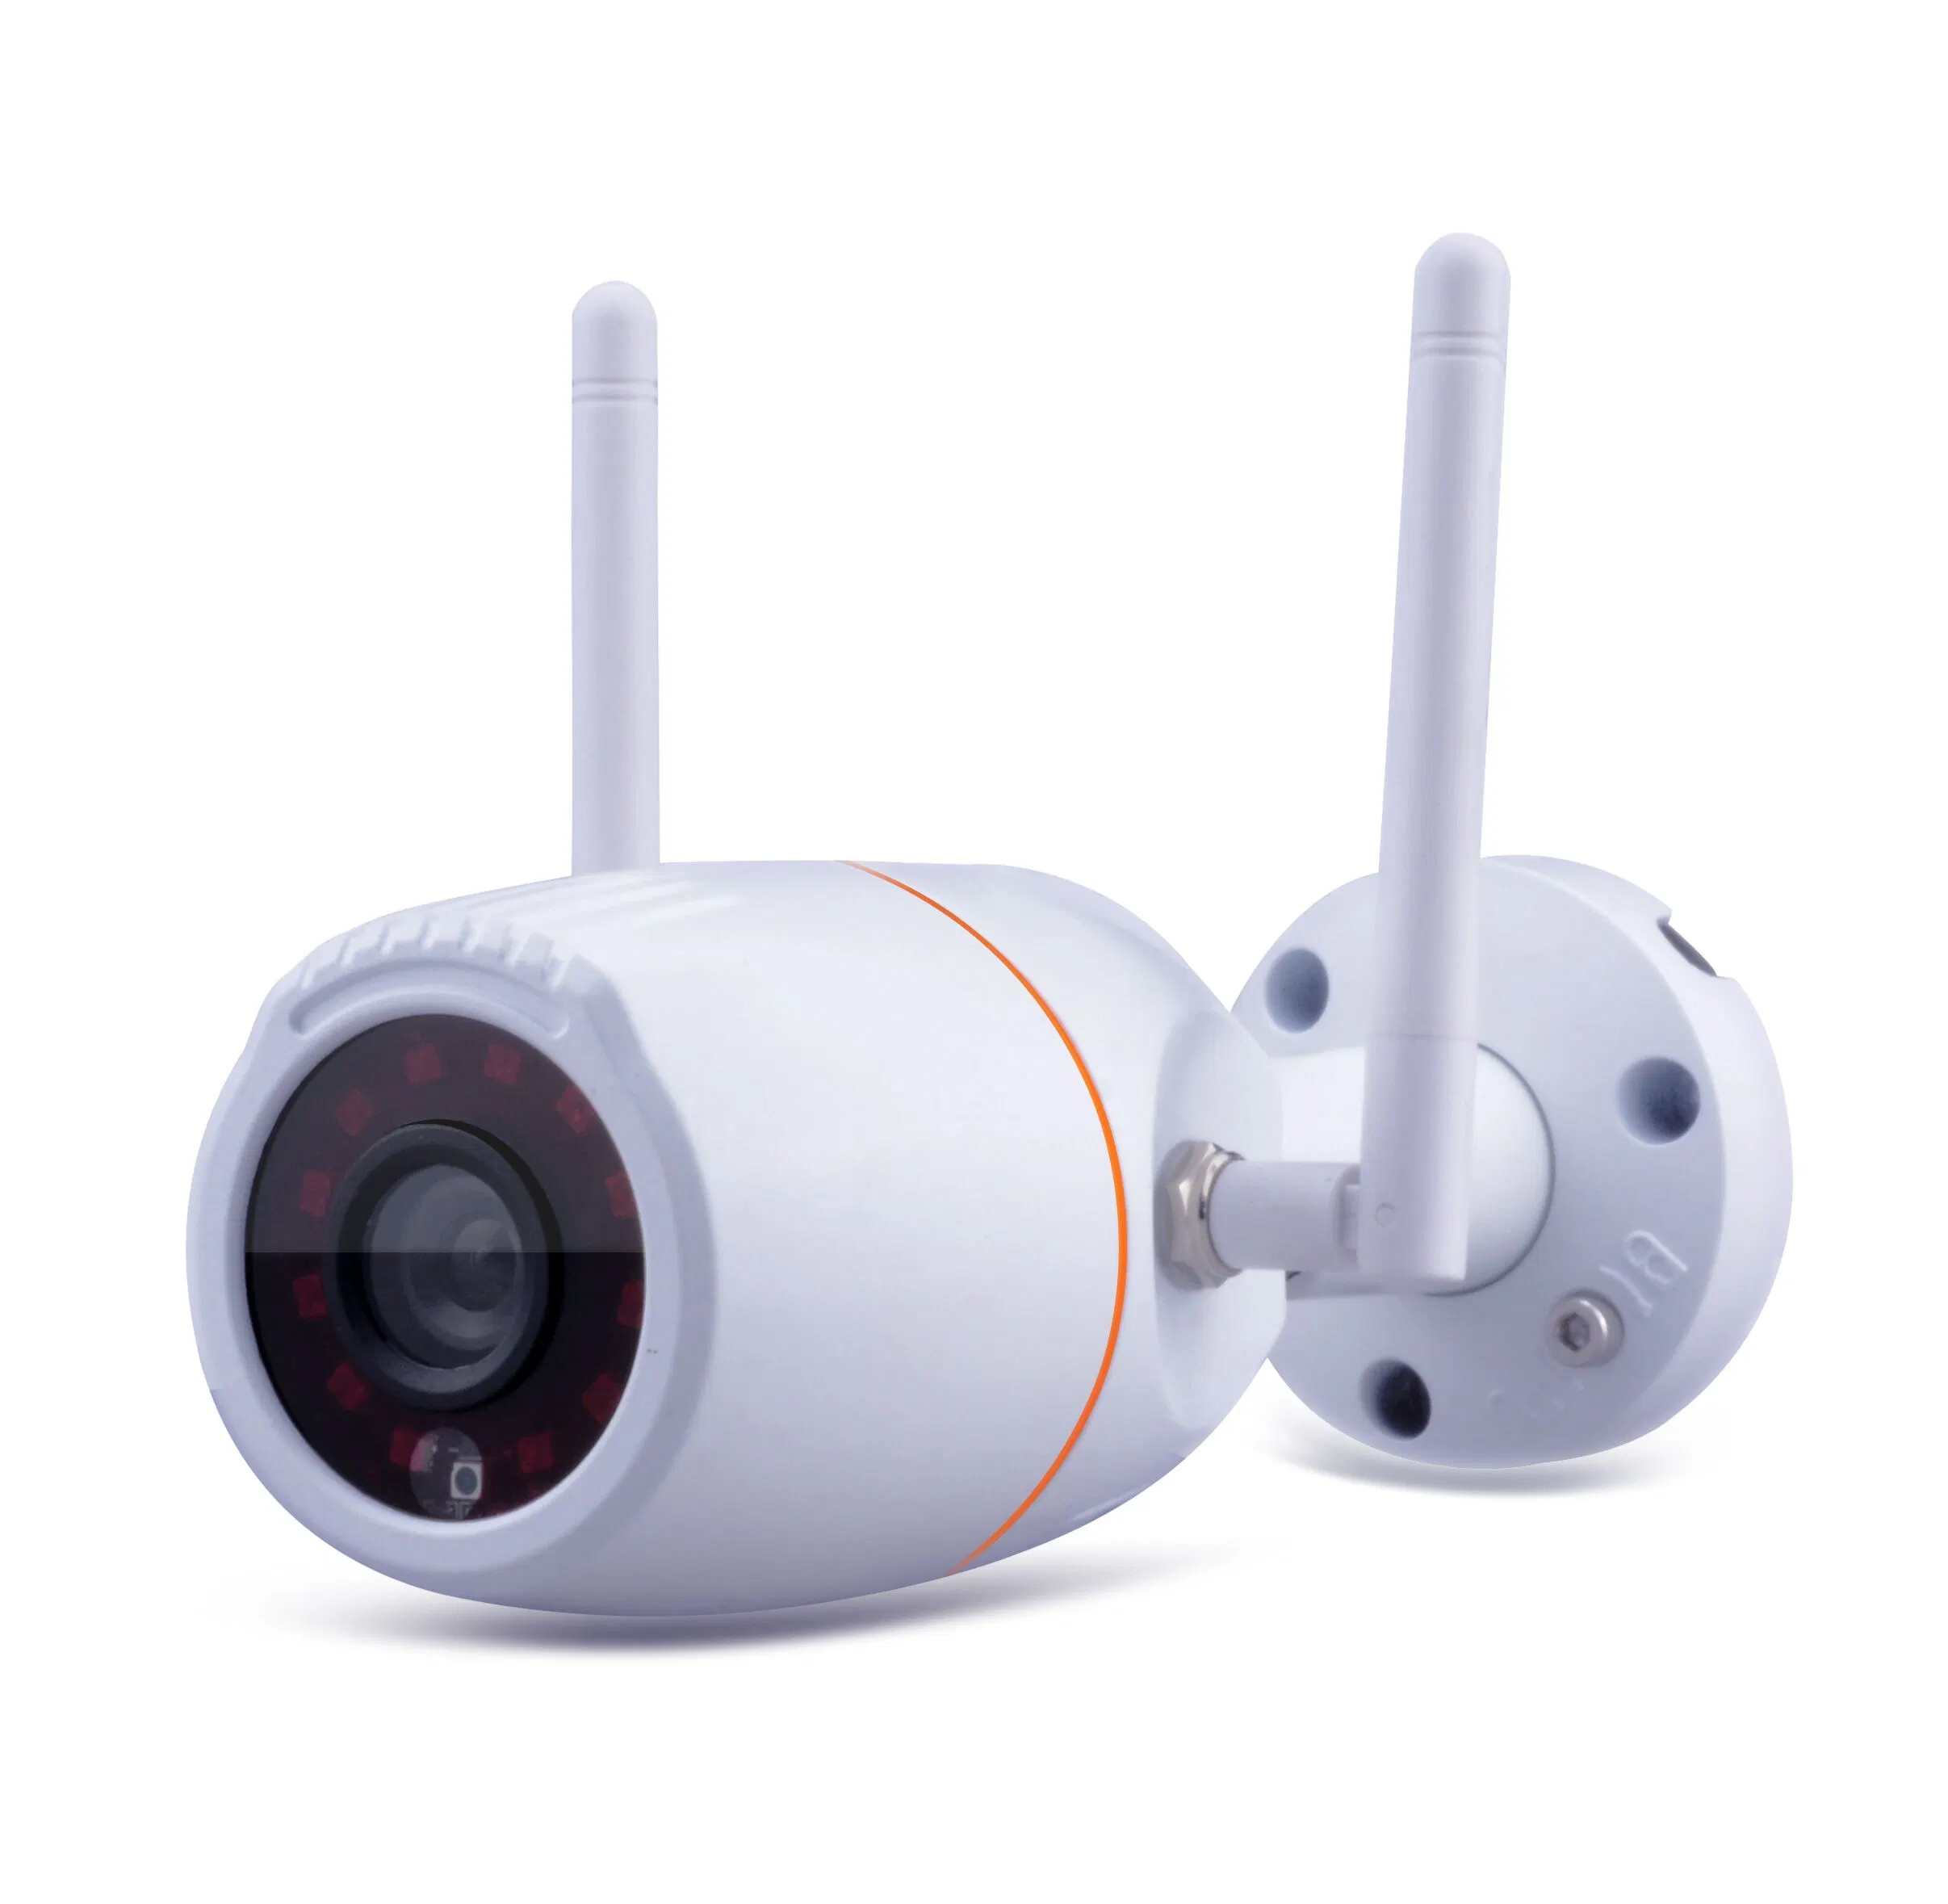 Toesee WiFi IP Camera Weatherproof Security IP Camera Outdoor Wireless CCTV Cameras 720p SD Card Slot Bullet Surveillance Camera